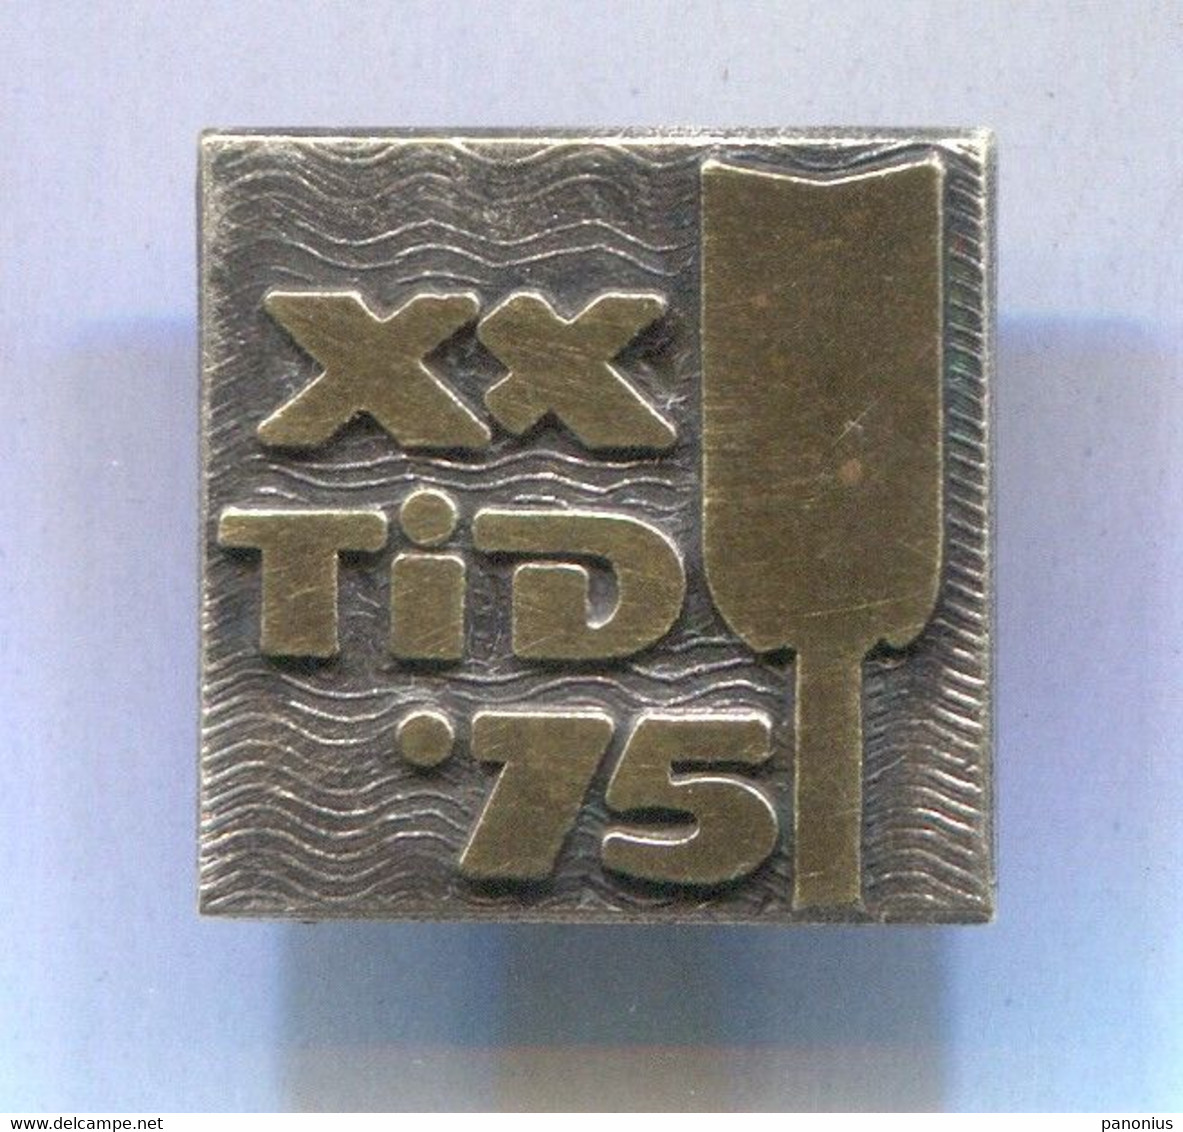 Rowing Kayak Canoe - XX TiD 1975. ICF Belgrade Yugoslavia, Vintage Pin Badge Abzeichen - Rudersport